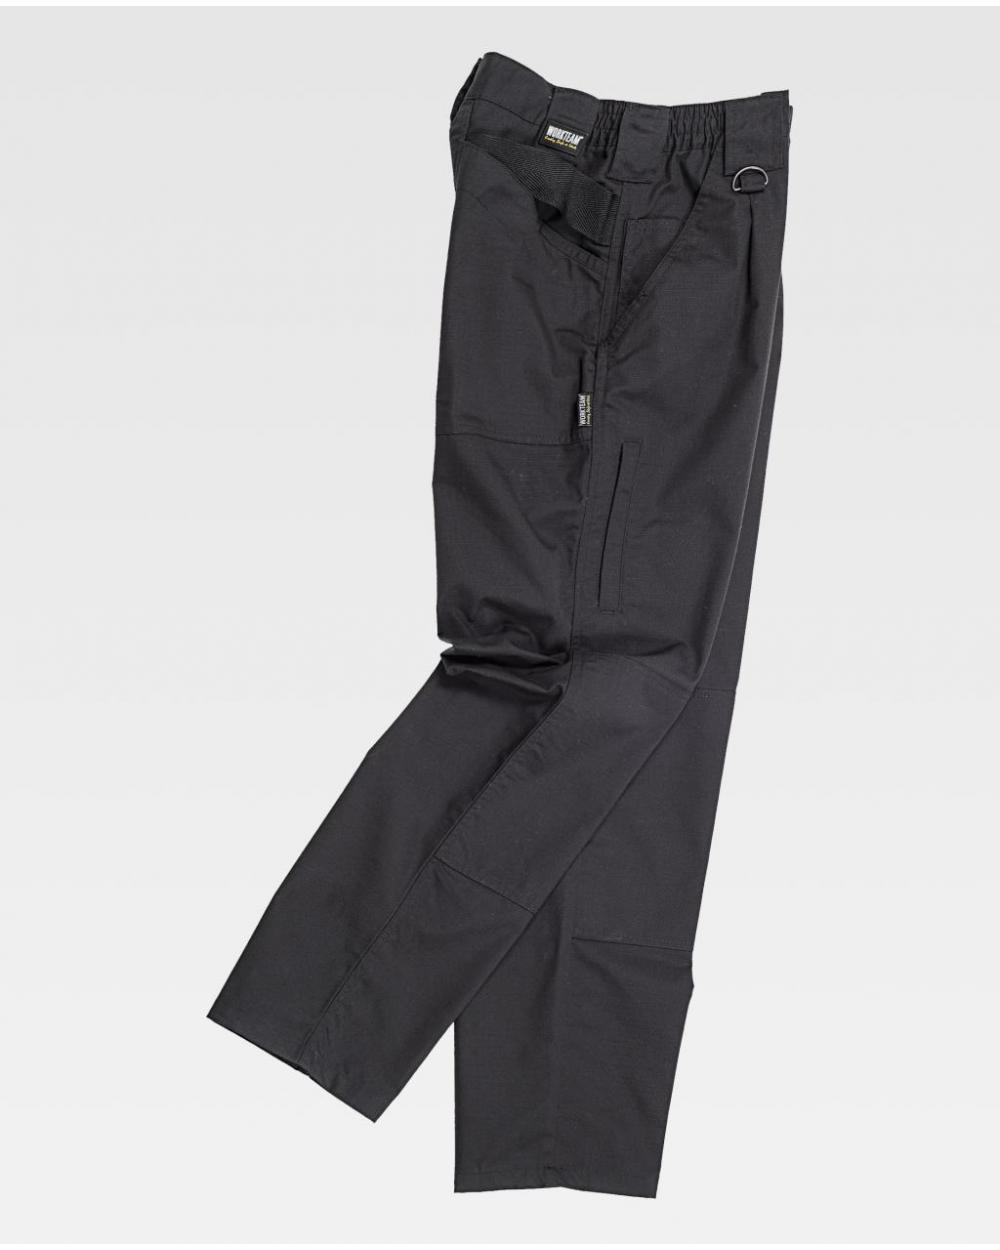 Comprar Pantalón antiespinos negro C4015 Negro online bataro